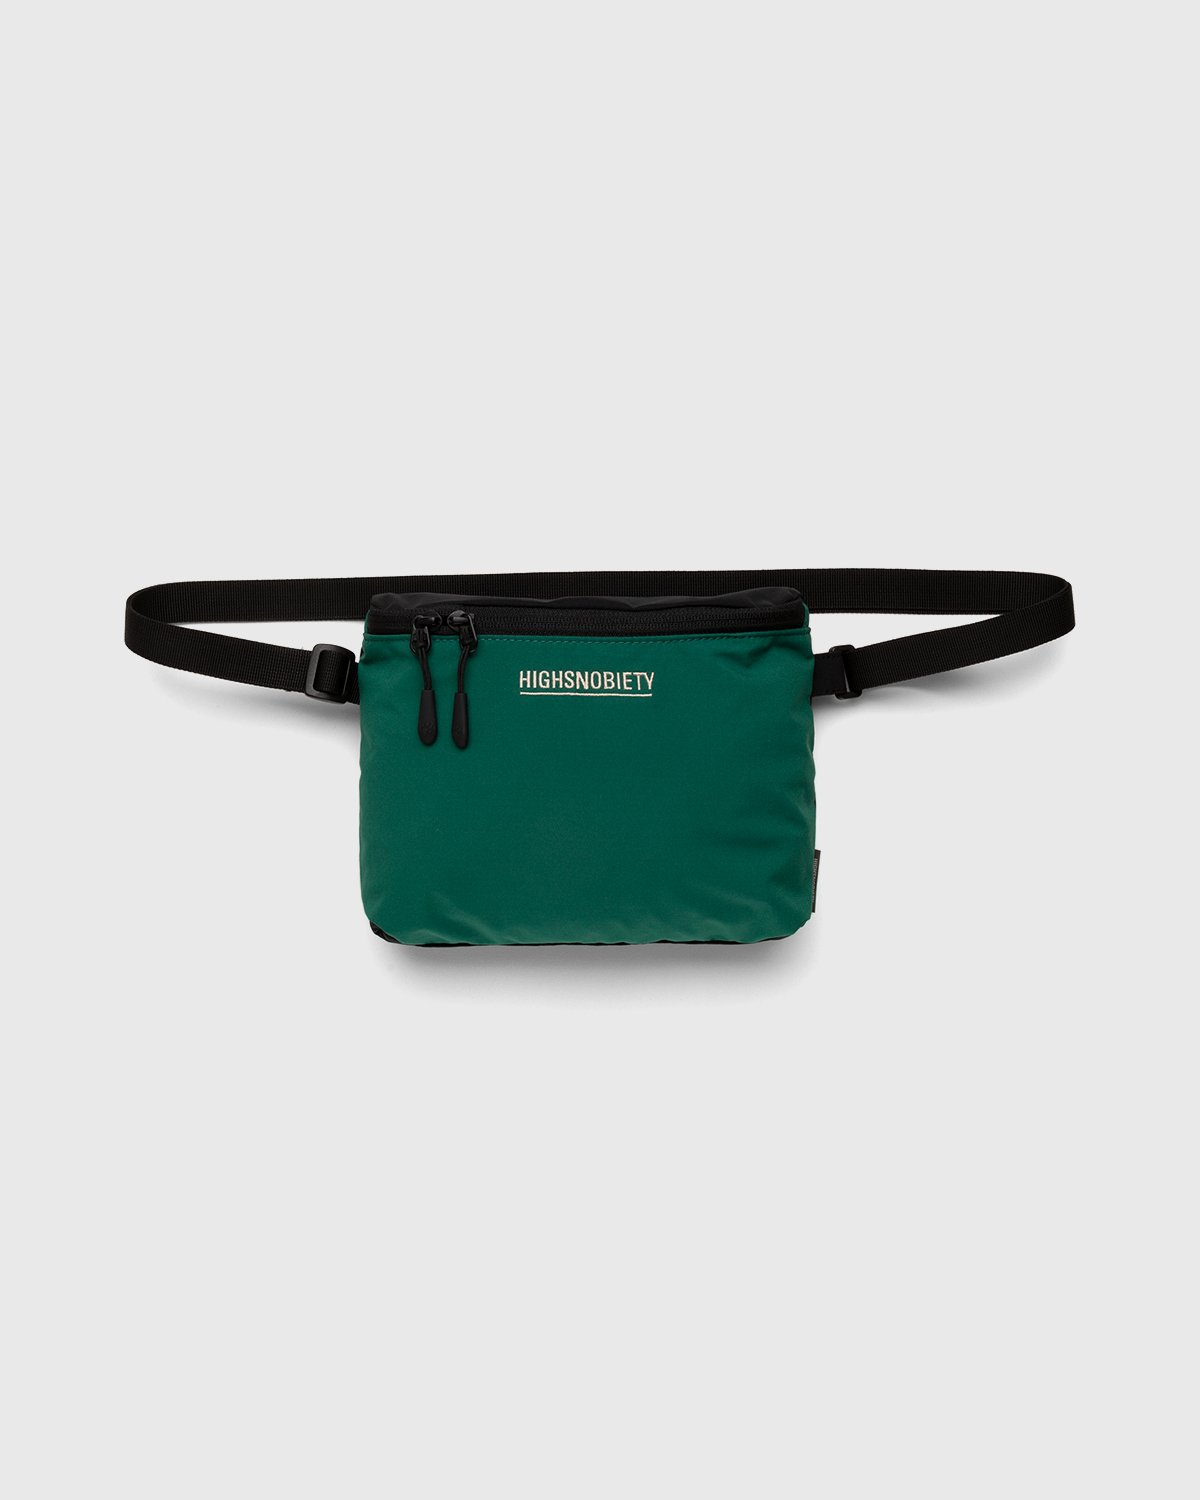 Jack Wolfskin x Highsnobiety - HS Sports Belt Bag Pine Tree - Accessories - Green - Image 1